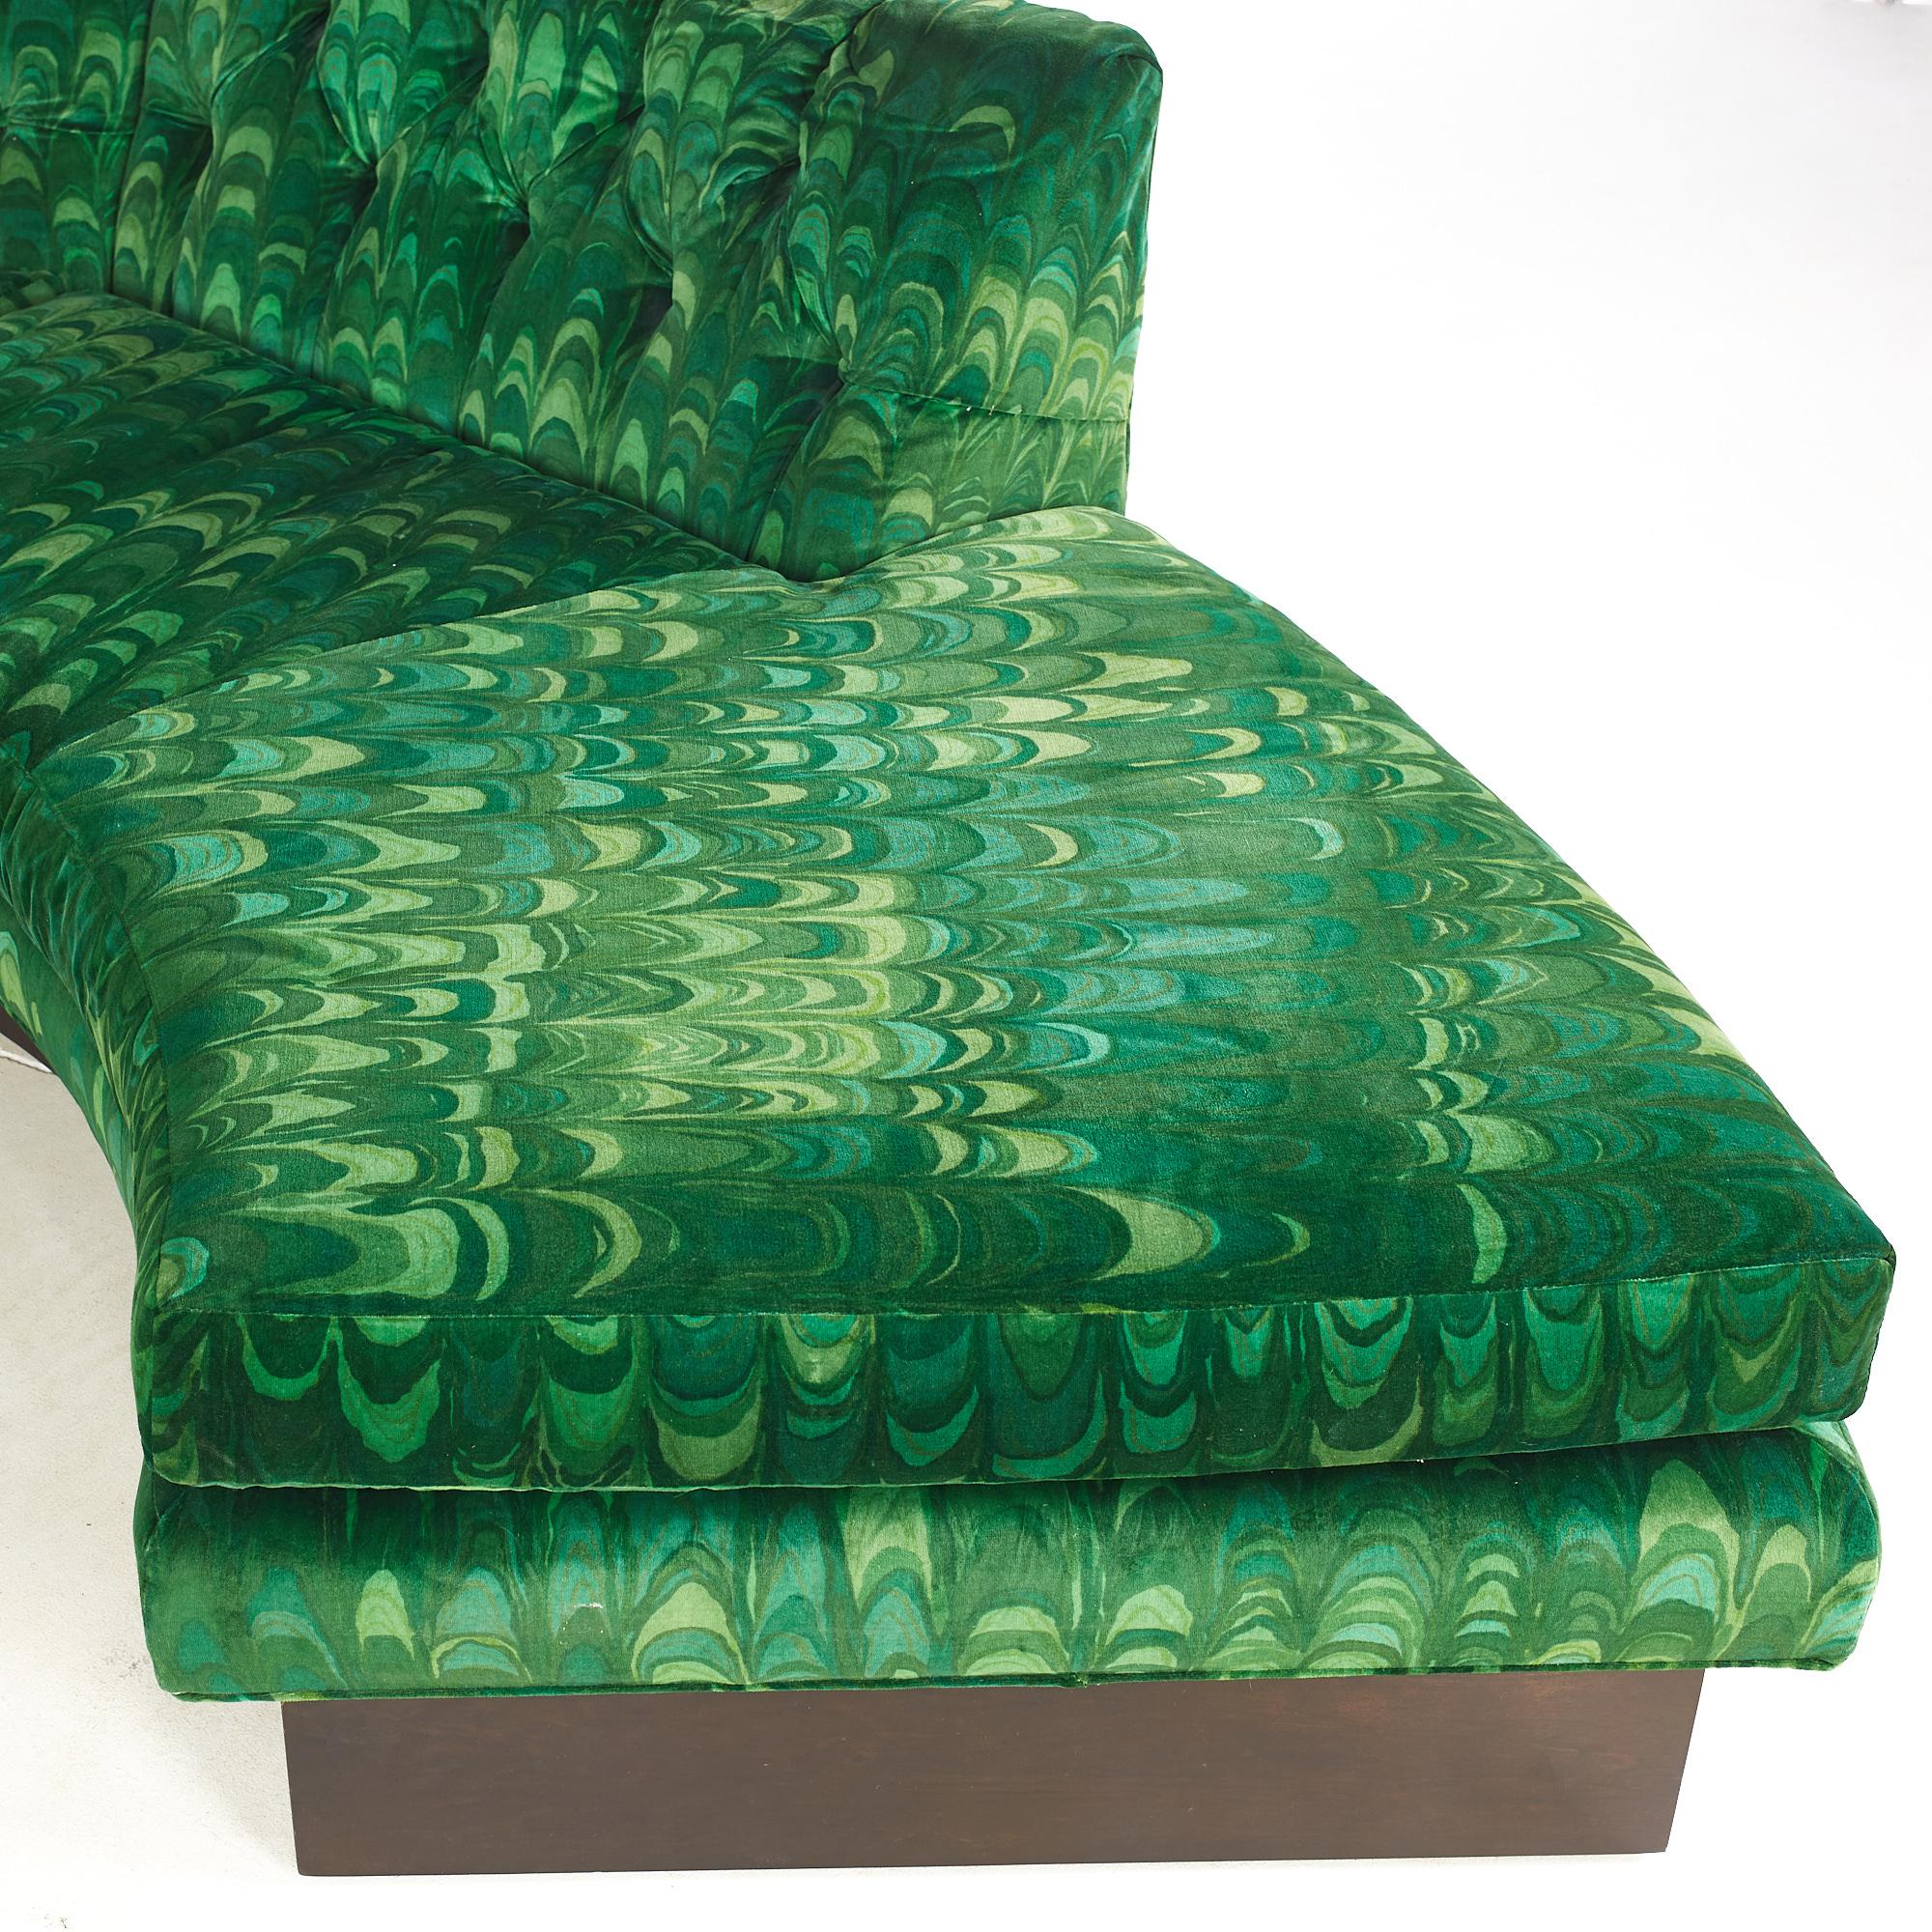 Late 20th Century Erwin Lambeth MCM Circular Sectional Pit Sofa Original Jack Lenor Larsen Fabric For Sale